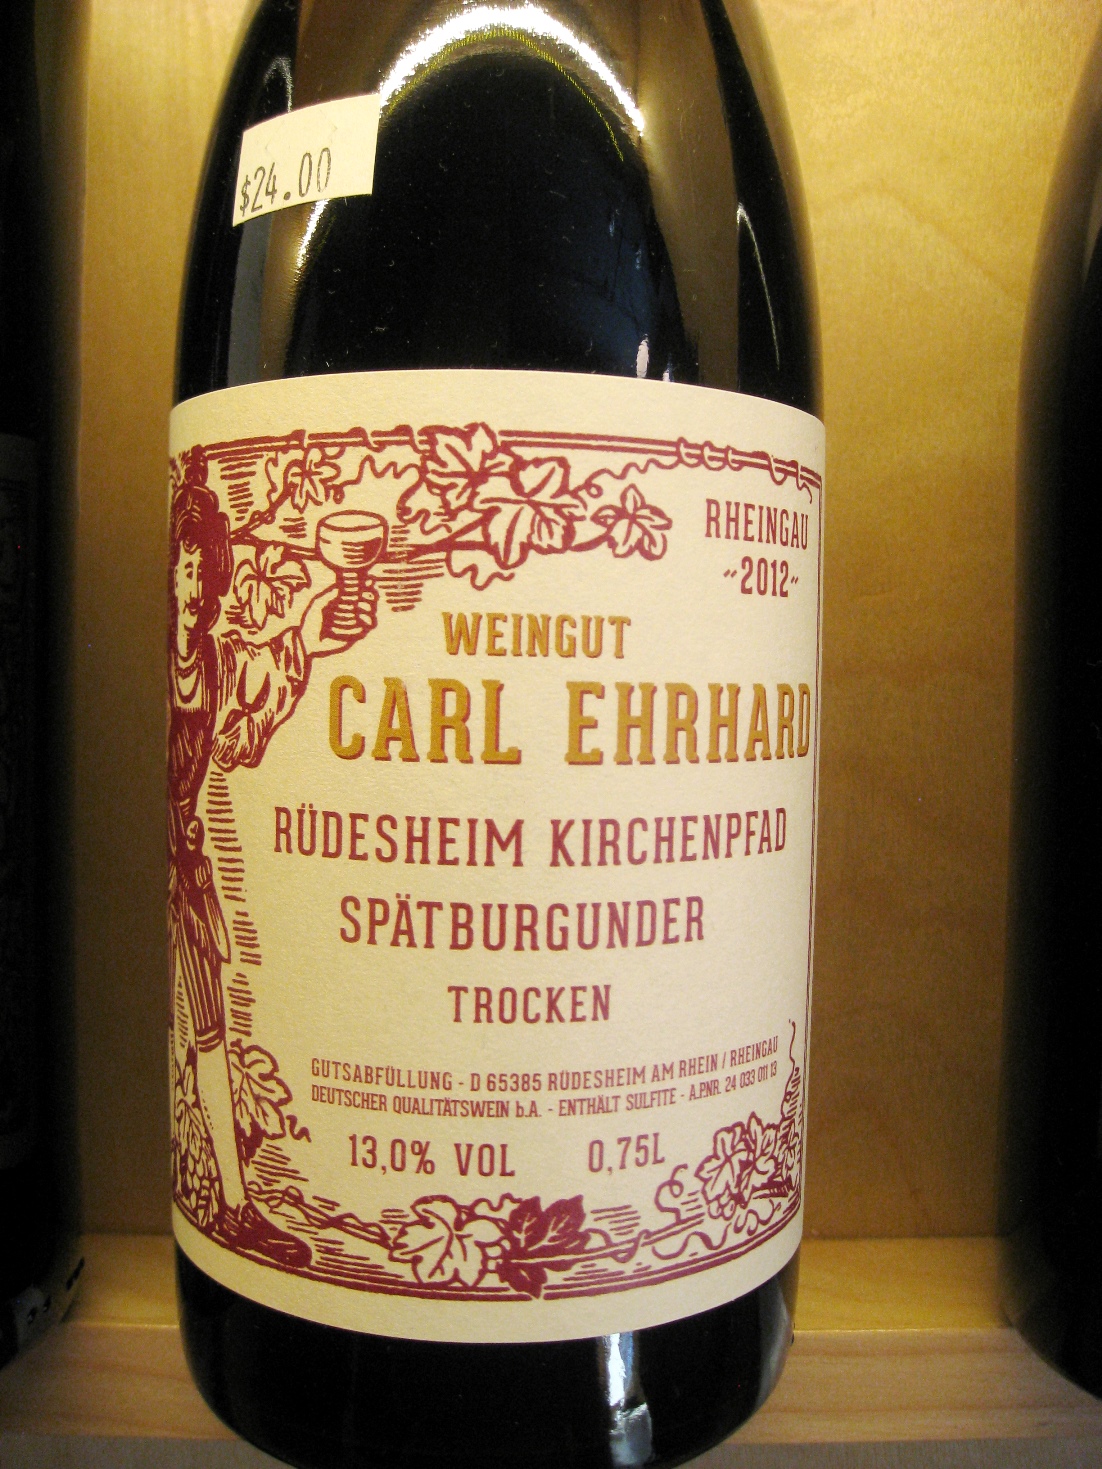 Weingut Carl Ehrhard, Rüdesheim, Kirchenpfad, Spätburgunder Trocken 2012, Rheingau, Germany, Wine Casual